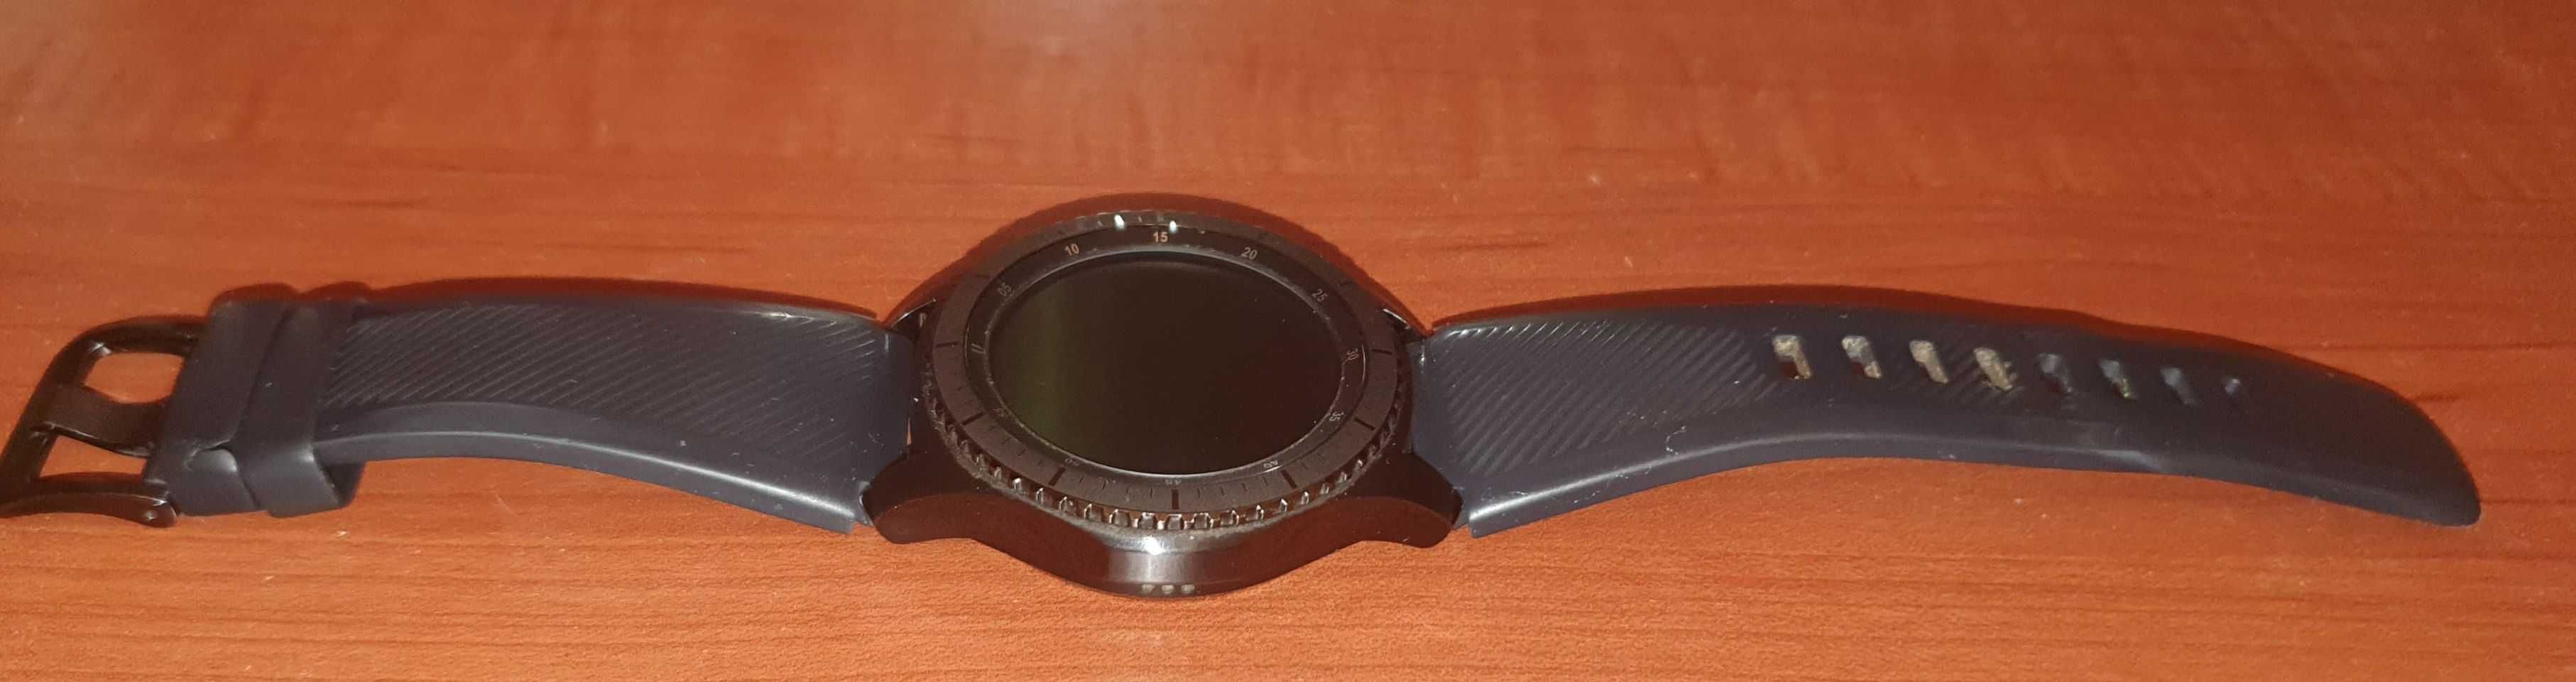 Ceas Smartwatch Samsung Gear S3, Frontier, IP68